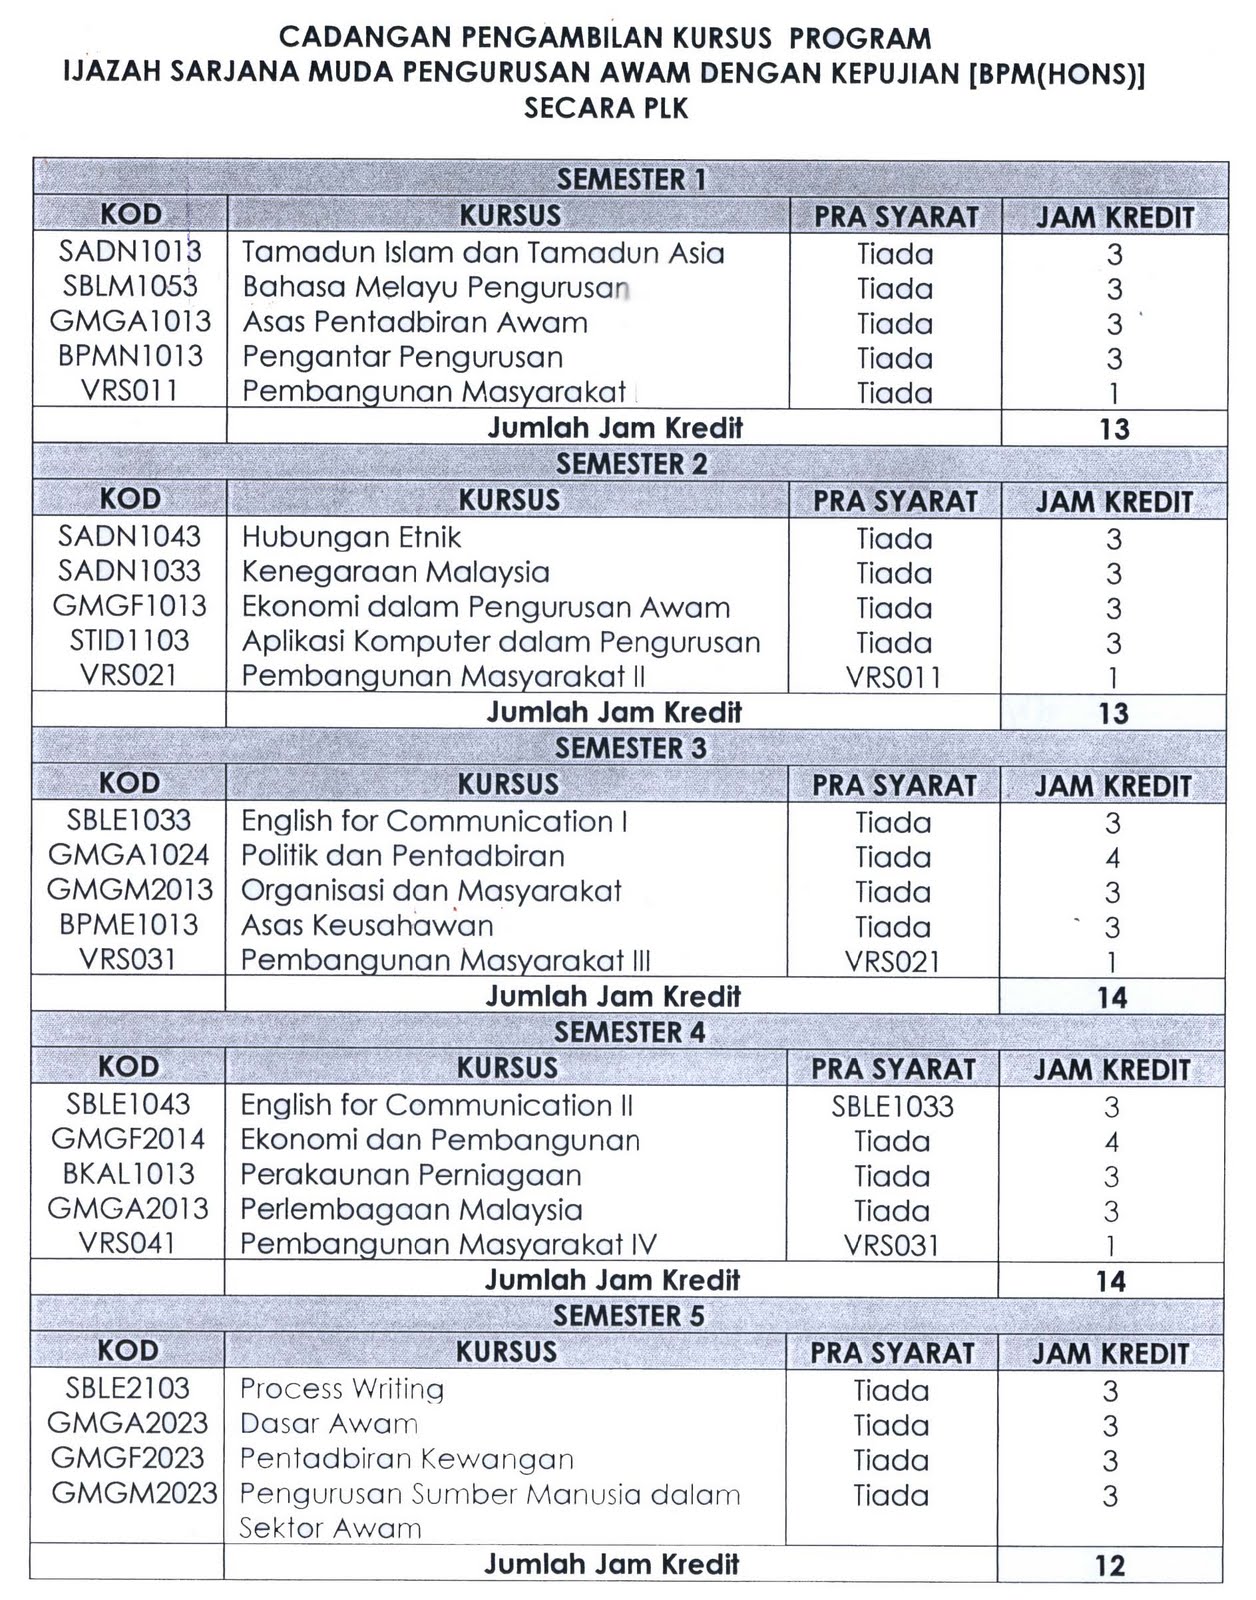 BPM PLK KL SEM OKT 2012/2013: BPM Program Structure